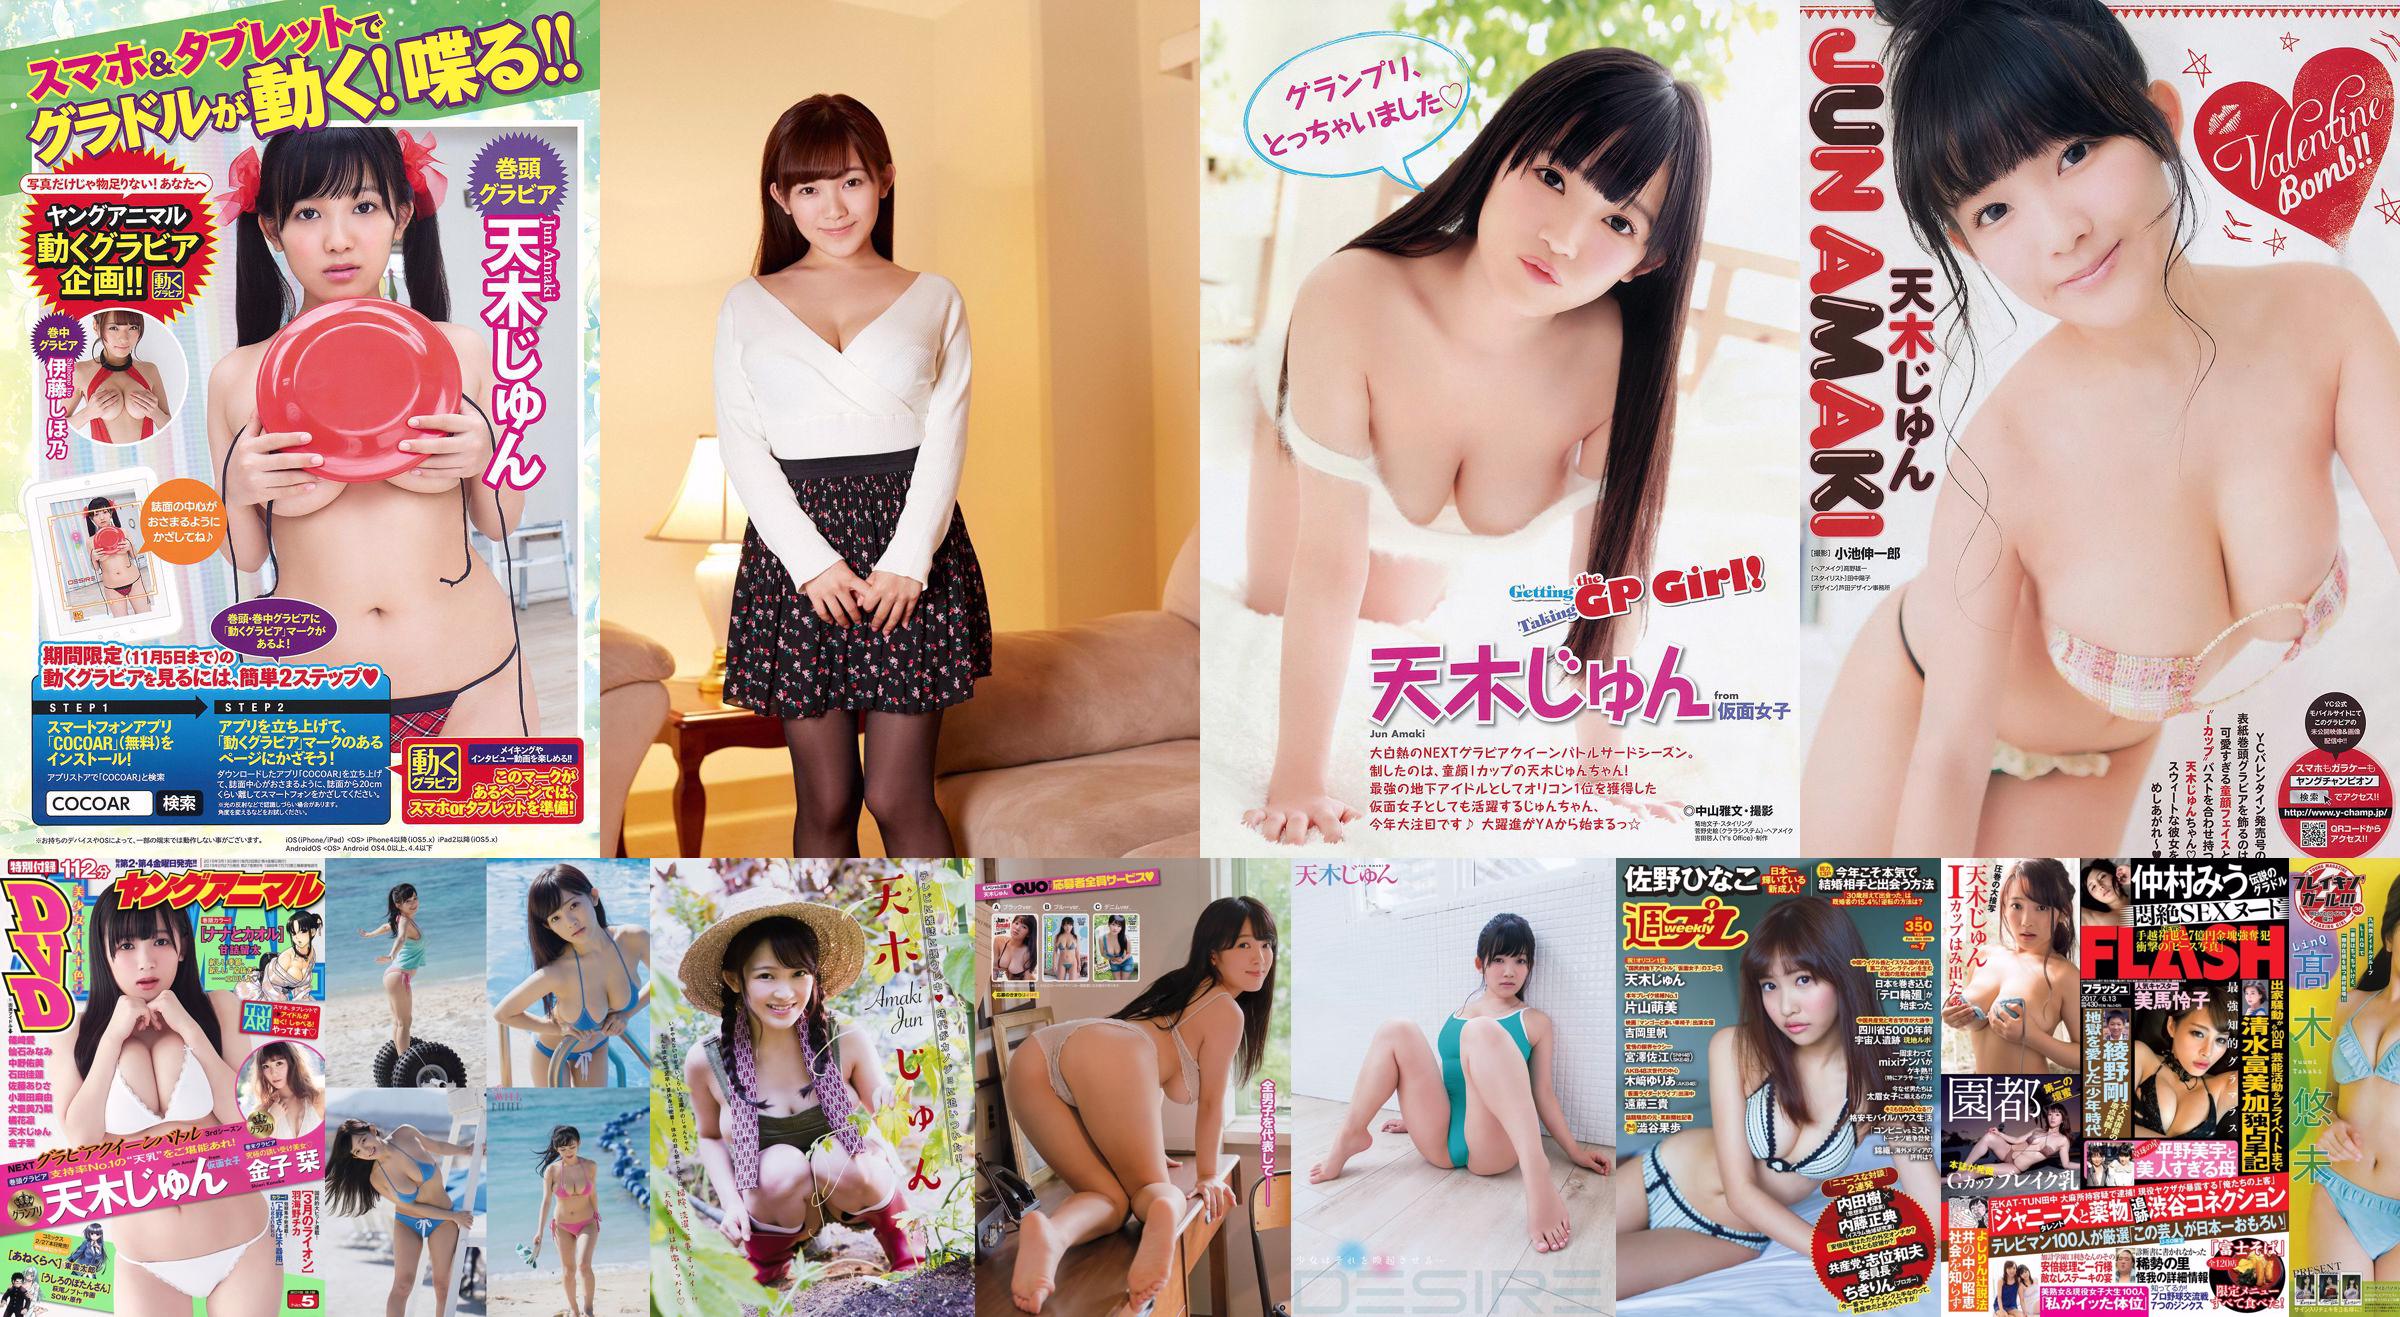 Kara Ryu il 《Shinjuku Journey Photographs》 [Beauty My Girl] VOL.254 No.b659b4 Page 4